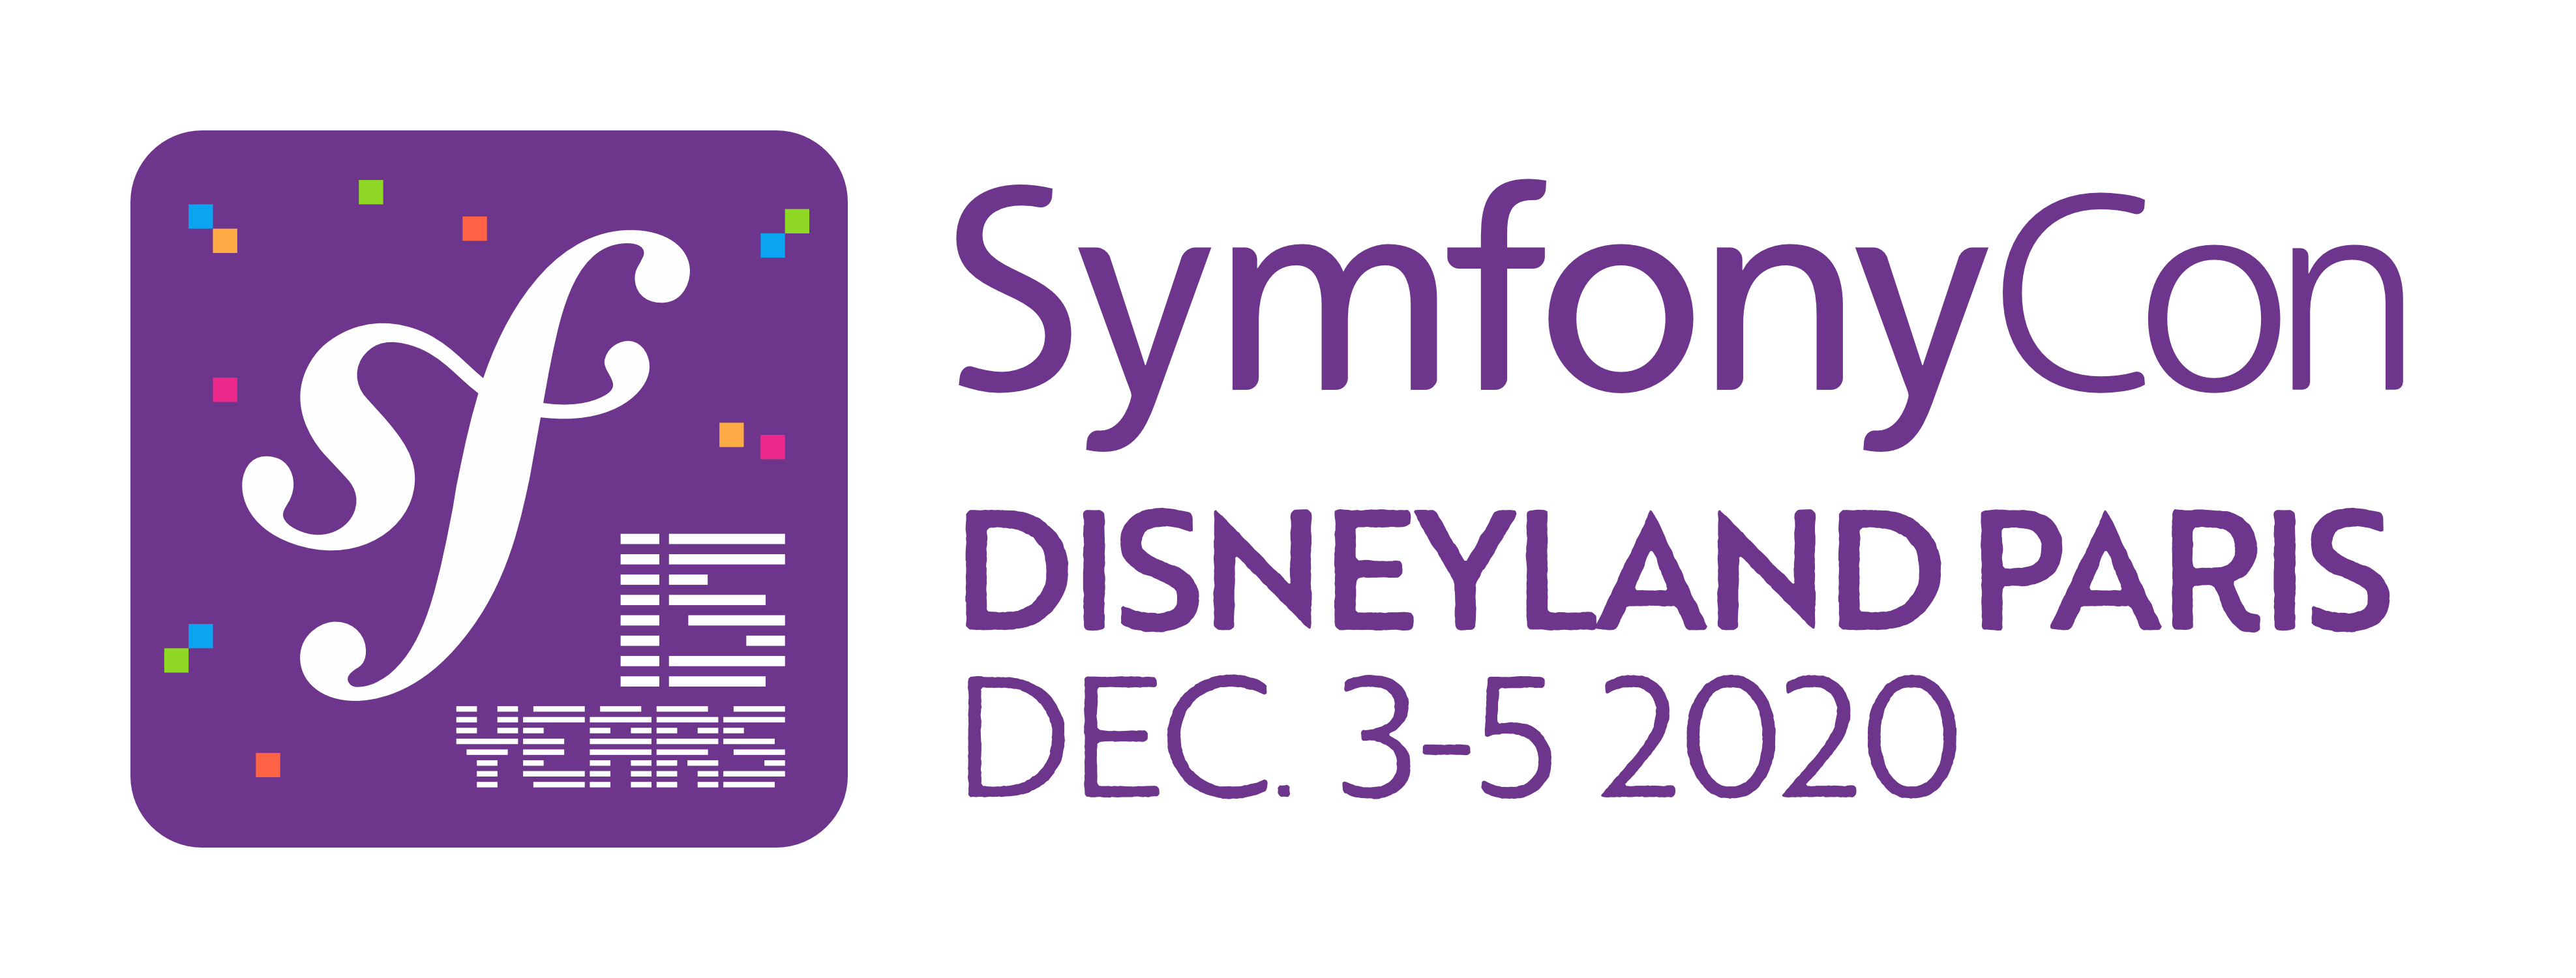 SymfonyCon Disneyland Paris 2020 Conference Logo